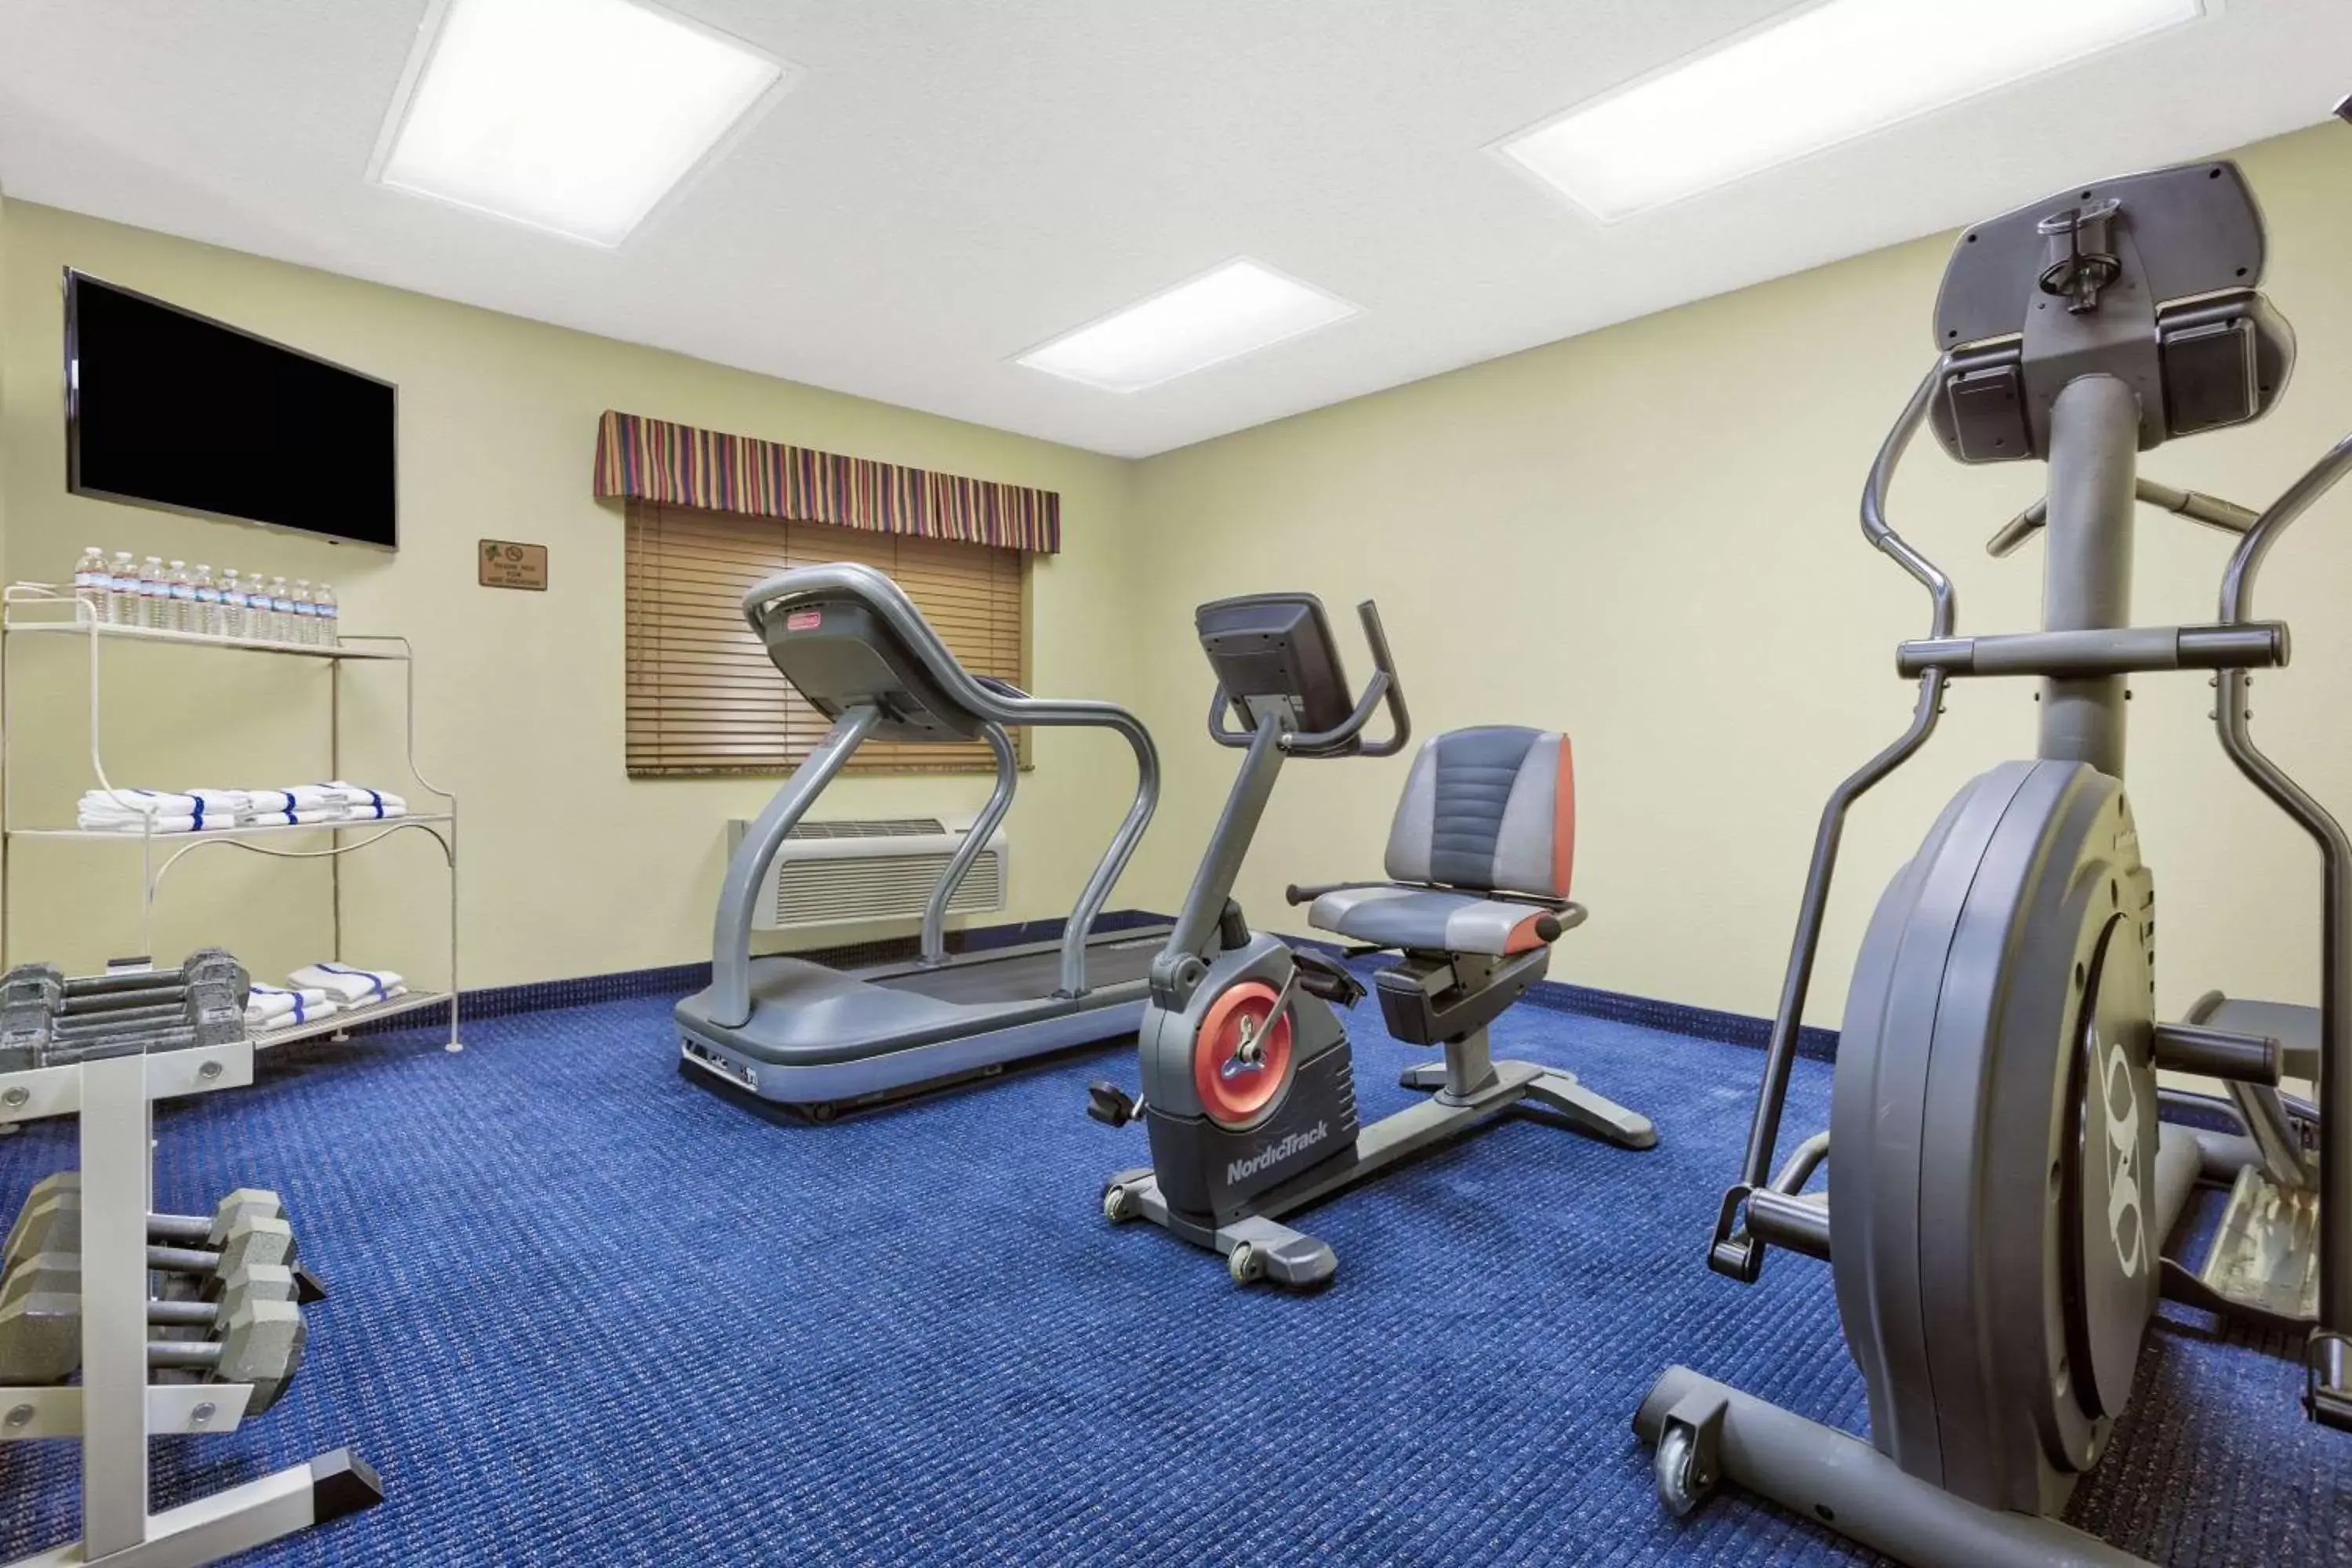 Fitness centre/facilities, Fitness Center/Facilities in AmericInn by Wyndham Vidalia